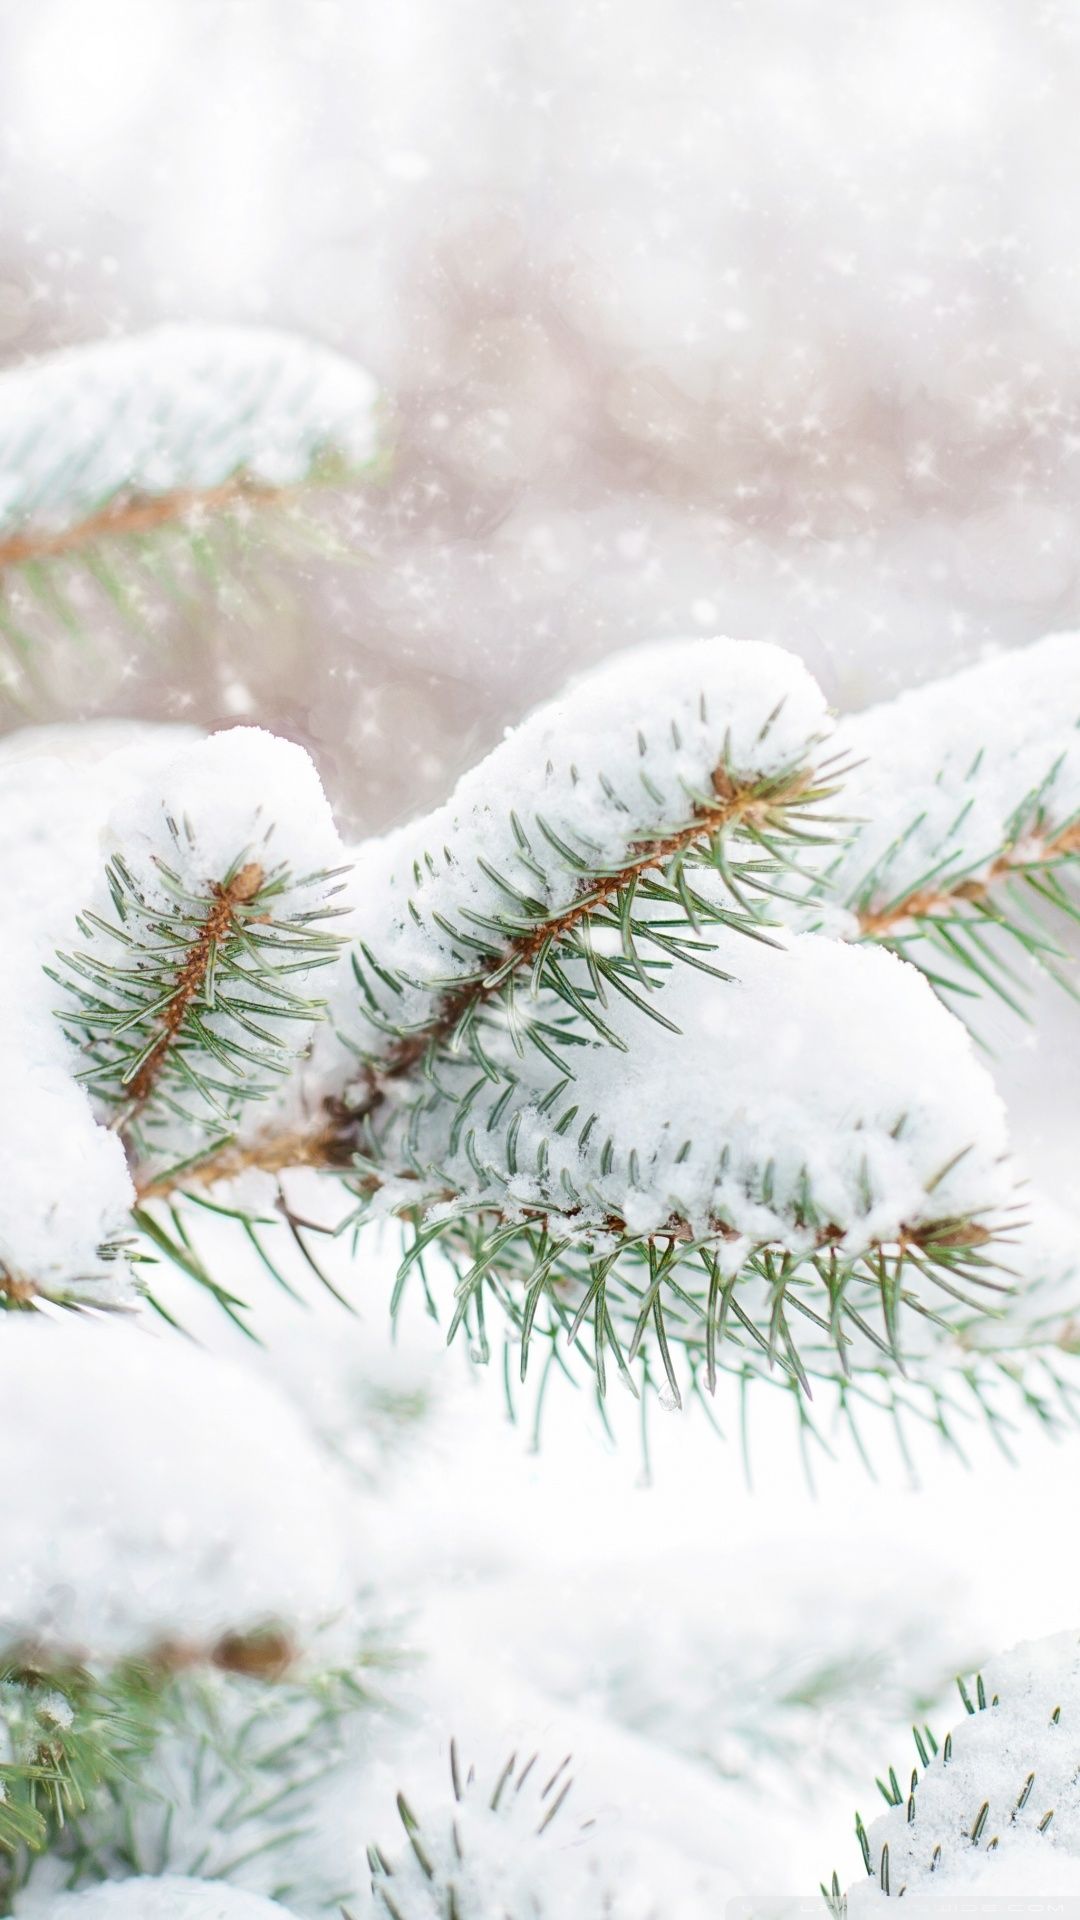 Snowy Pine Trees iPhone Wallpaper